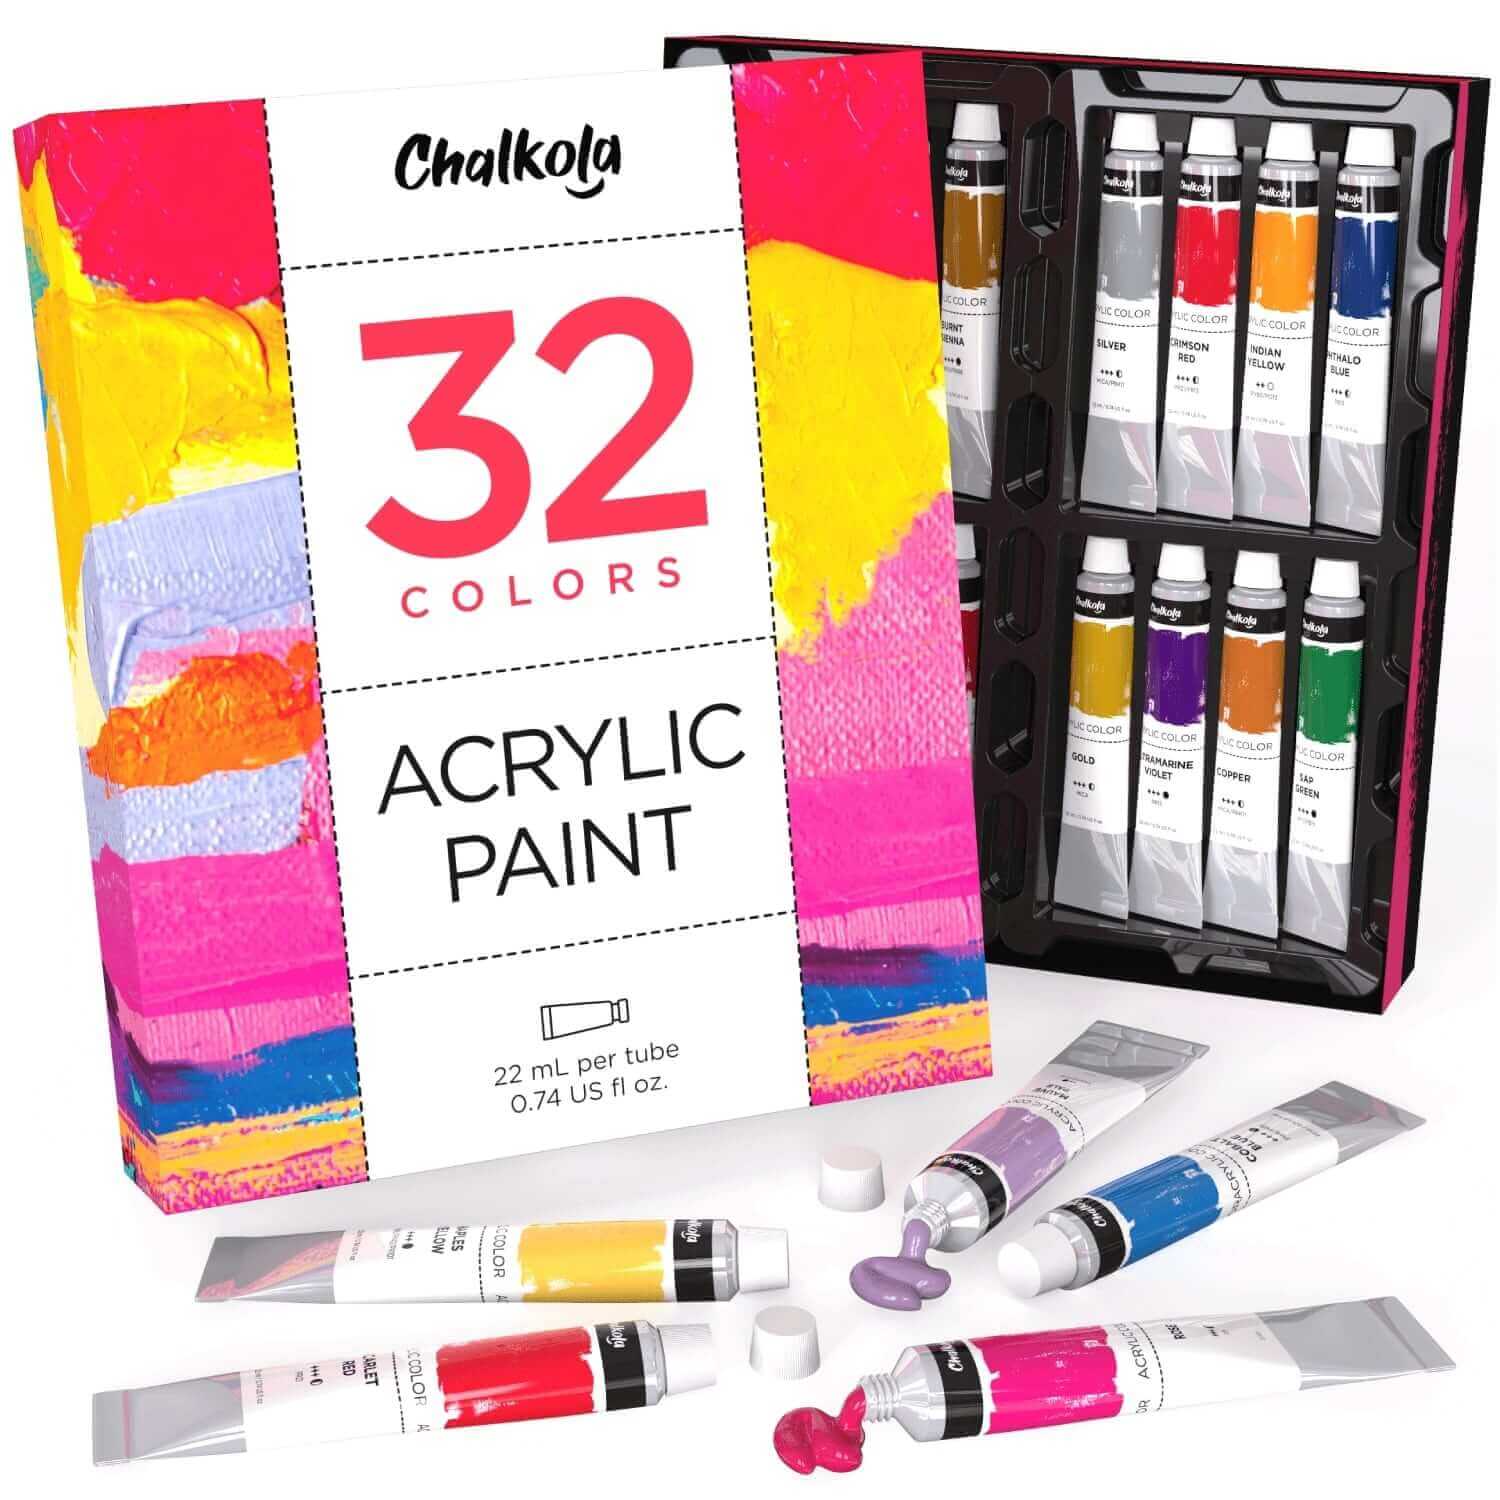 Acrylic Premium Artist Paint, 22ml Tubes - Set of 32